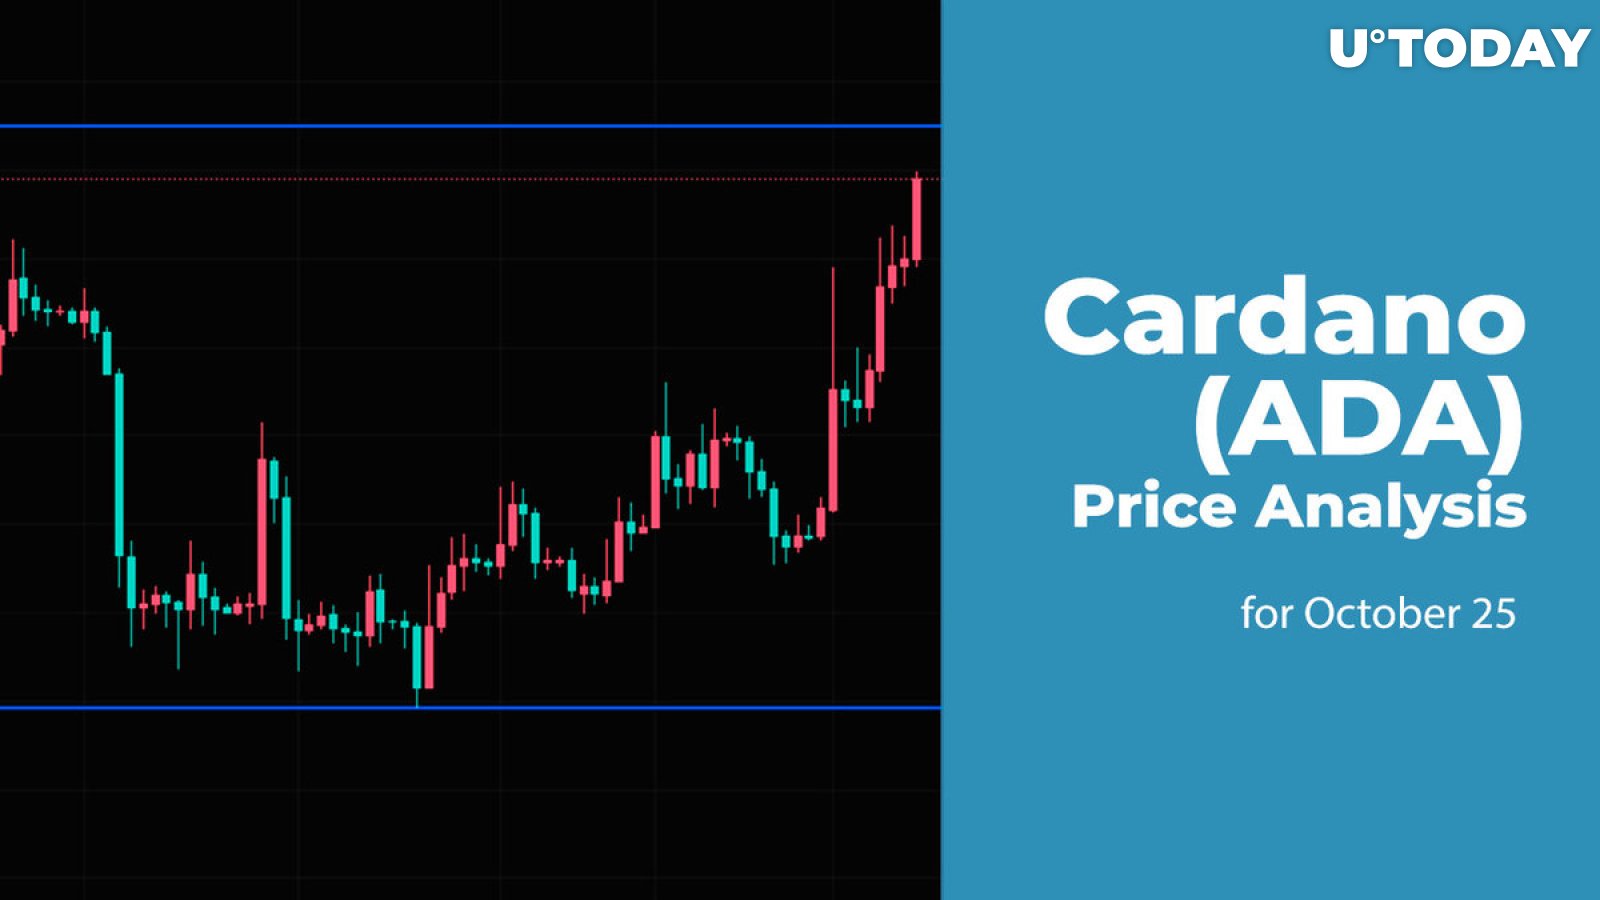 Cardano (ADA) Price Analysis for October 25